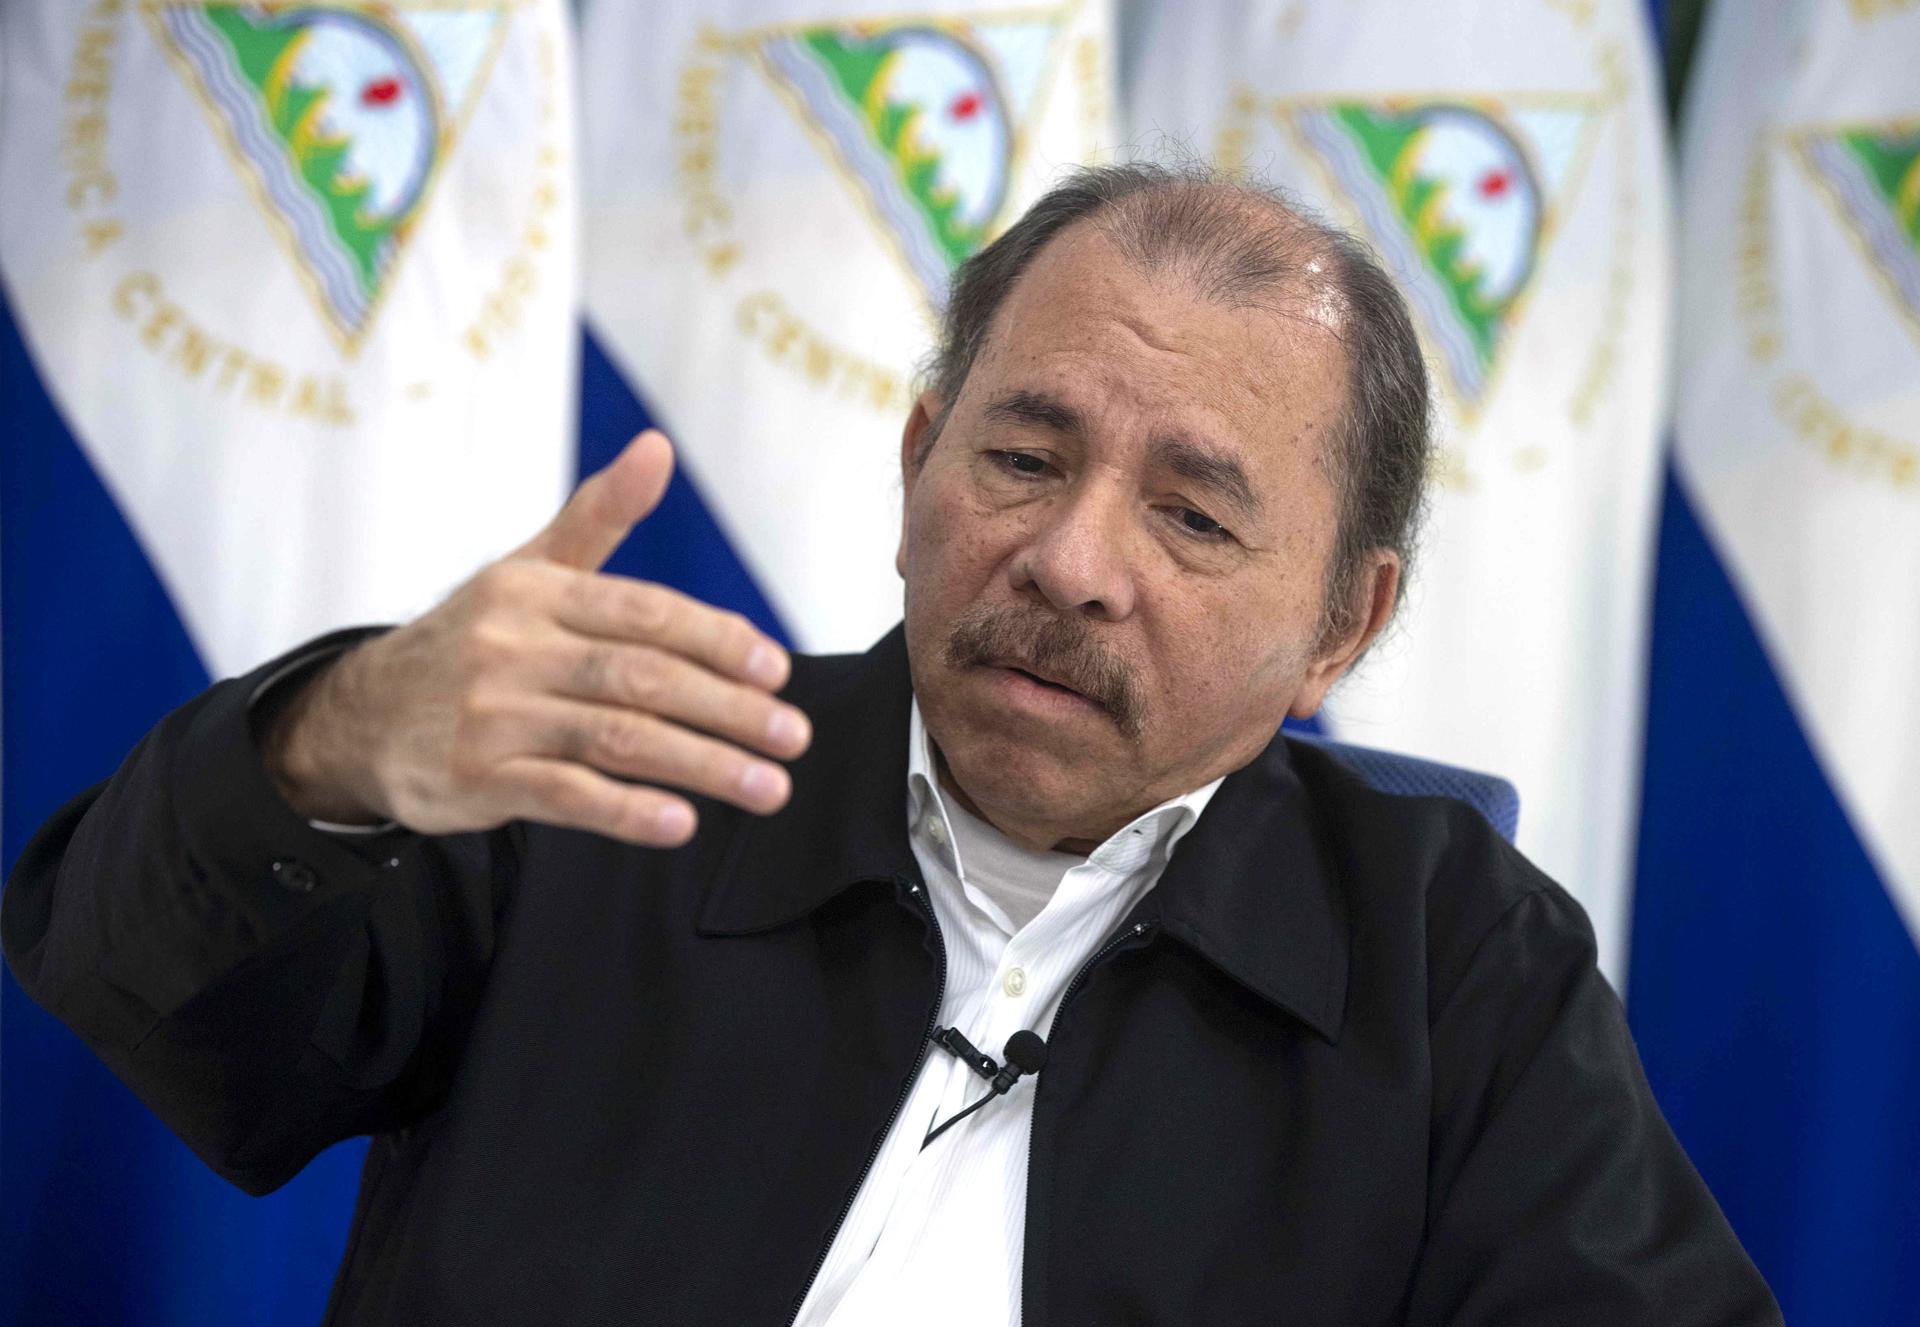 El presidente de Nicaragua Daniel Ortega